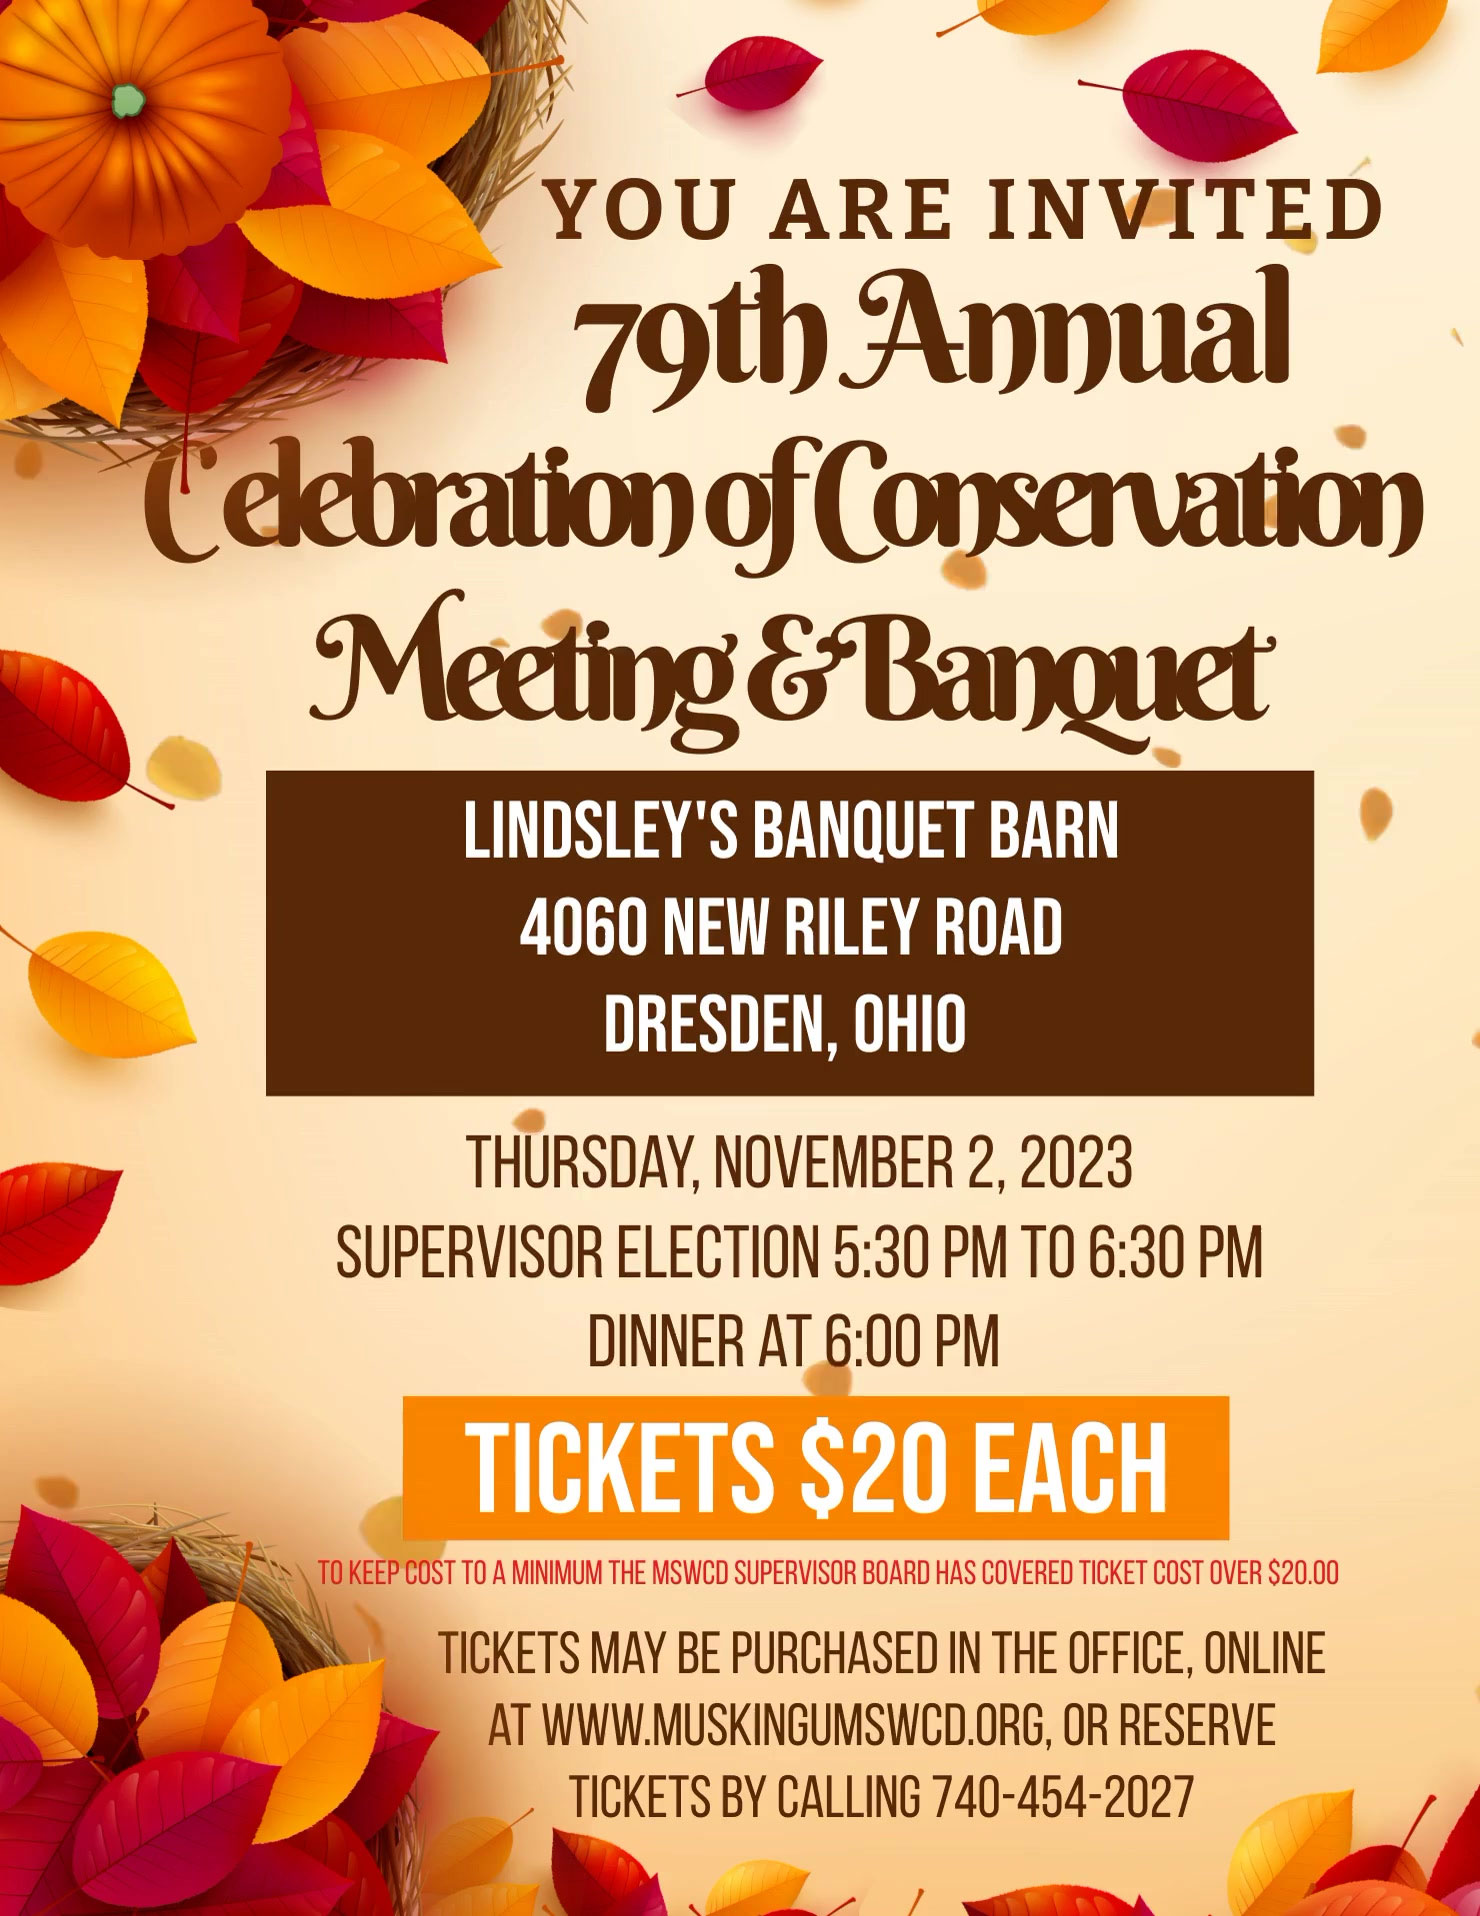 Annual Meeting and Banquet Invitation November 2023